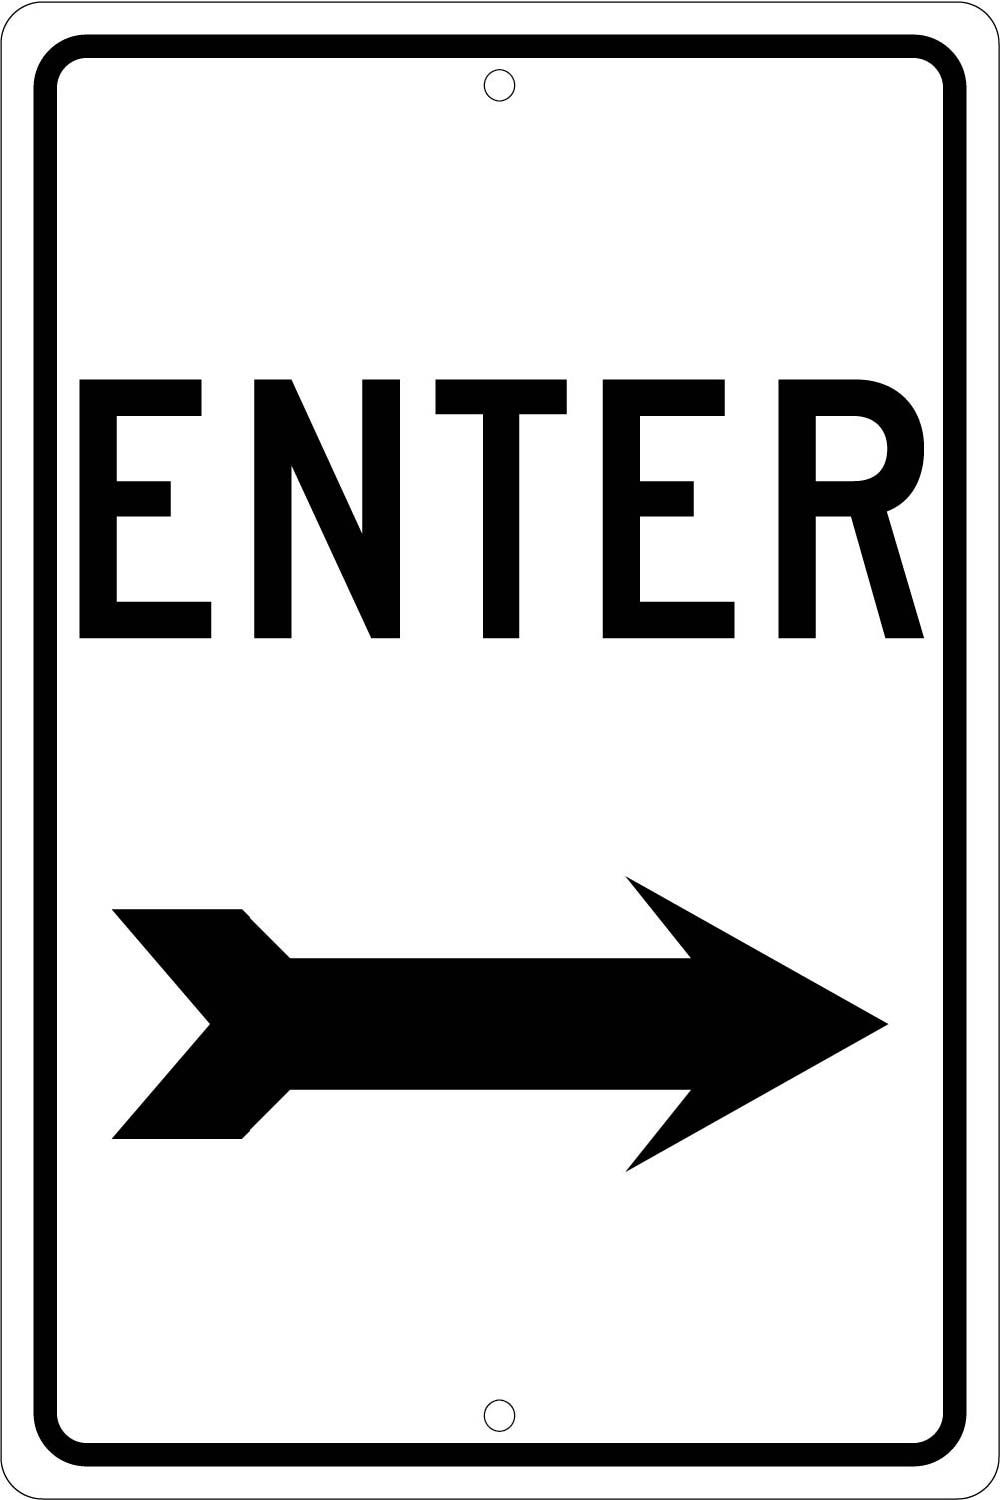 Enter Sign-eSafety Supplies, Inc